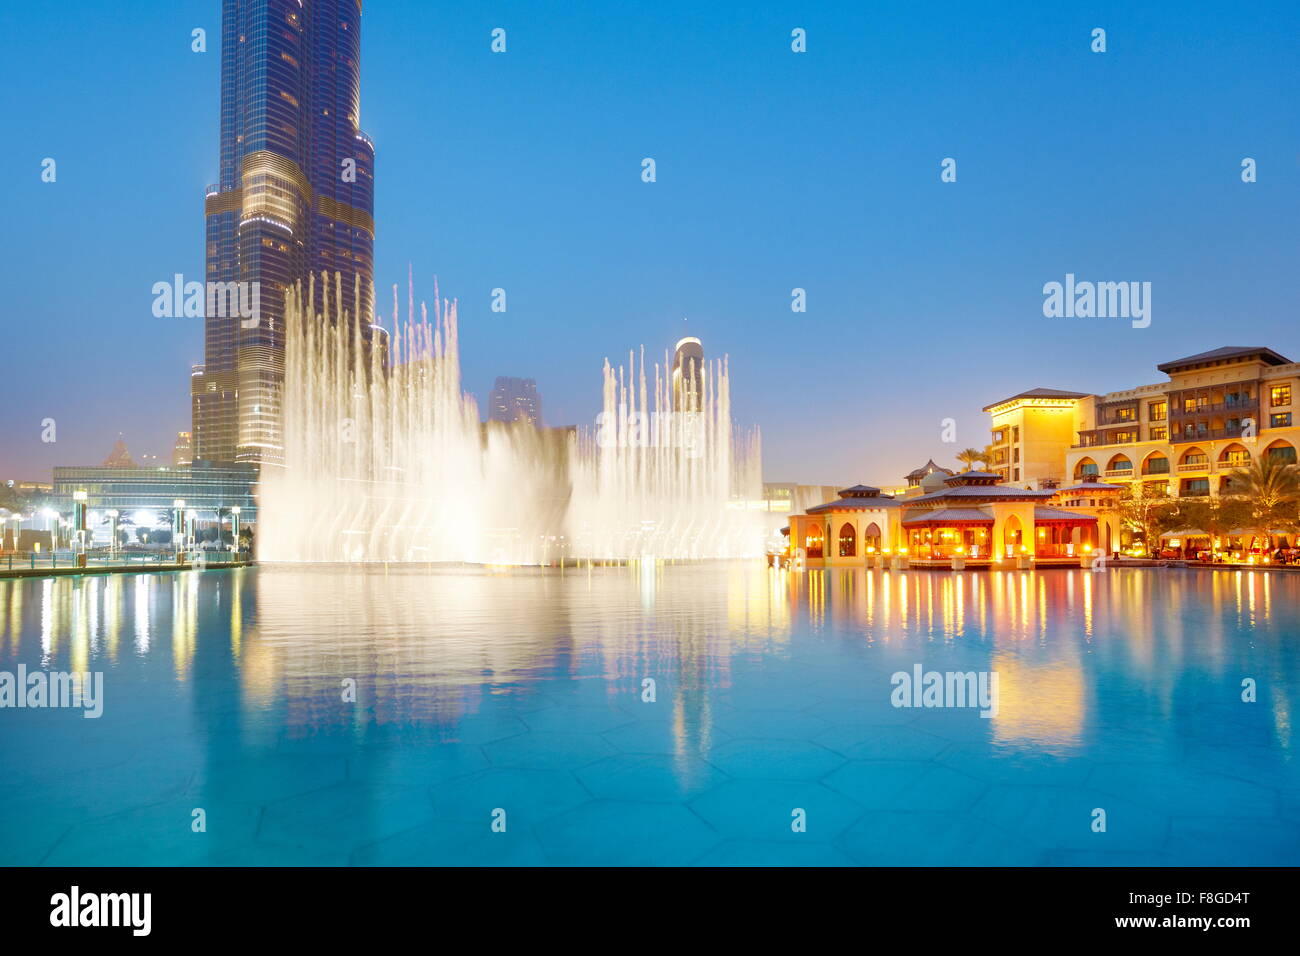 Dubai city - Burj Khalifa Tower, fountains show, United Arab Emirates Stock Photo